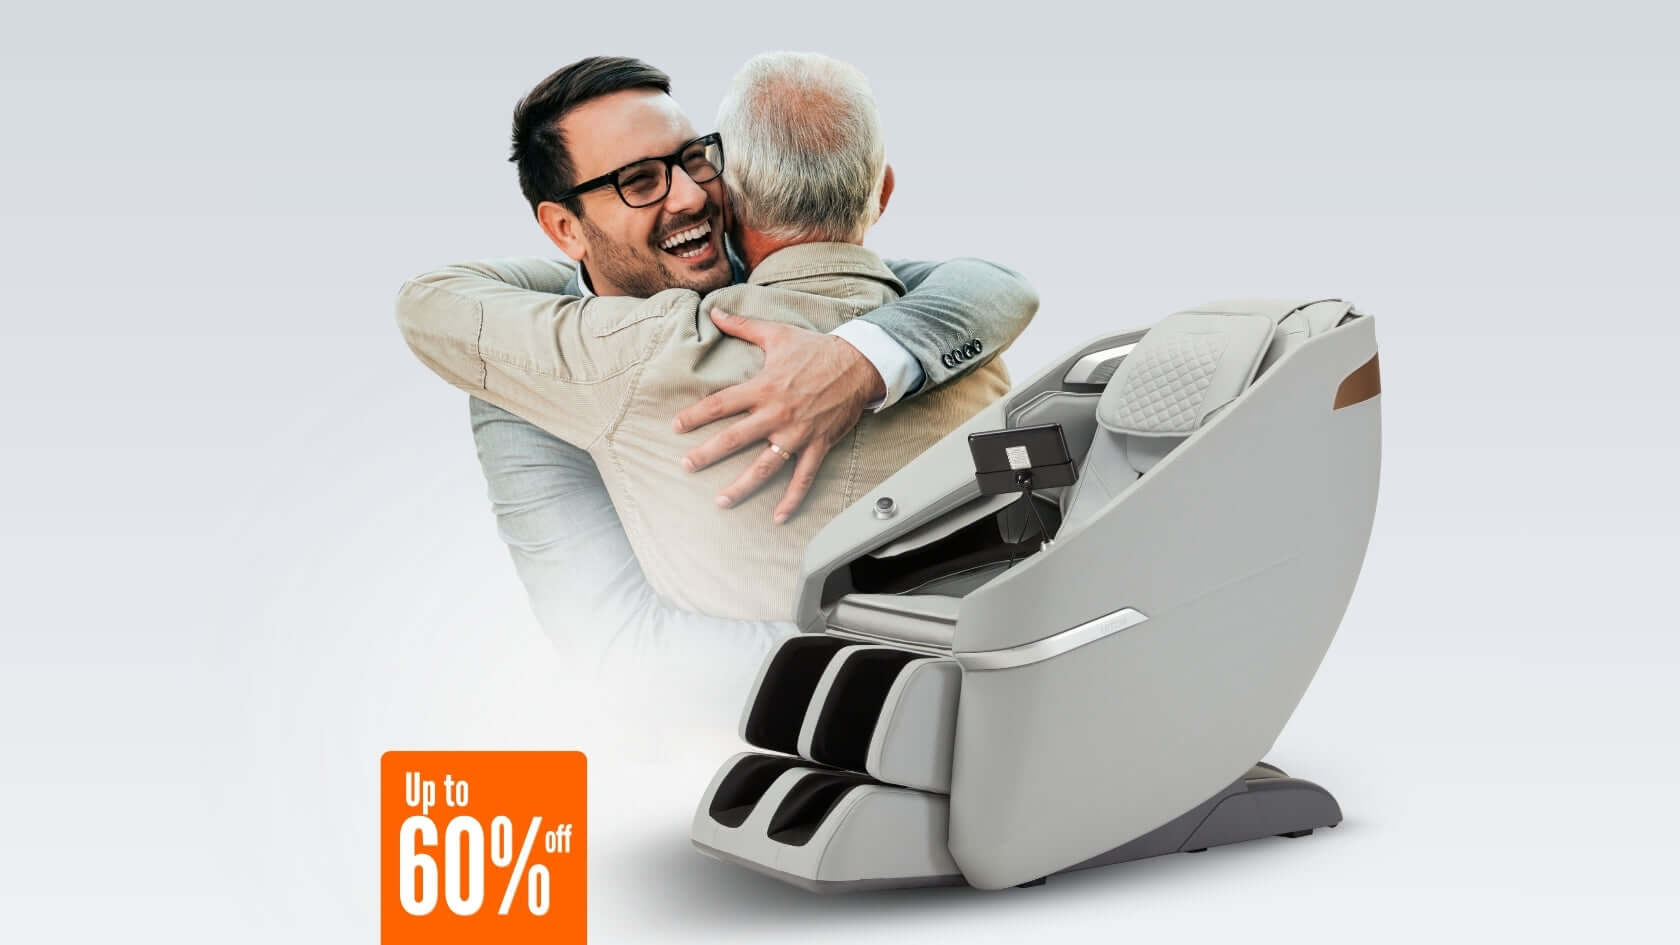 fathers day gift ideas saudi dubai | fathers day massage chair gift | fathers day rotai massage chair